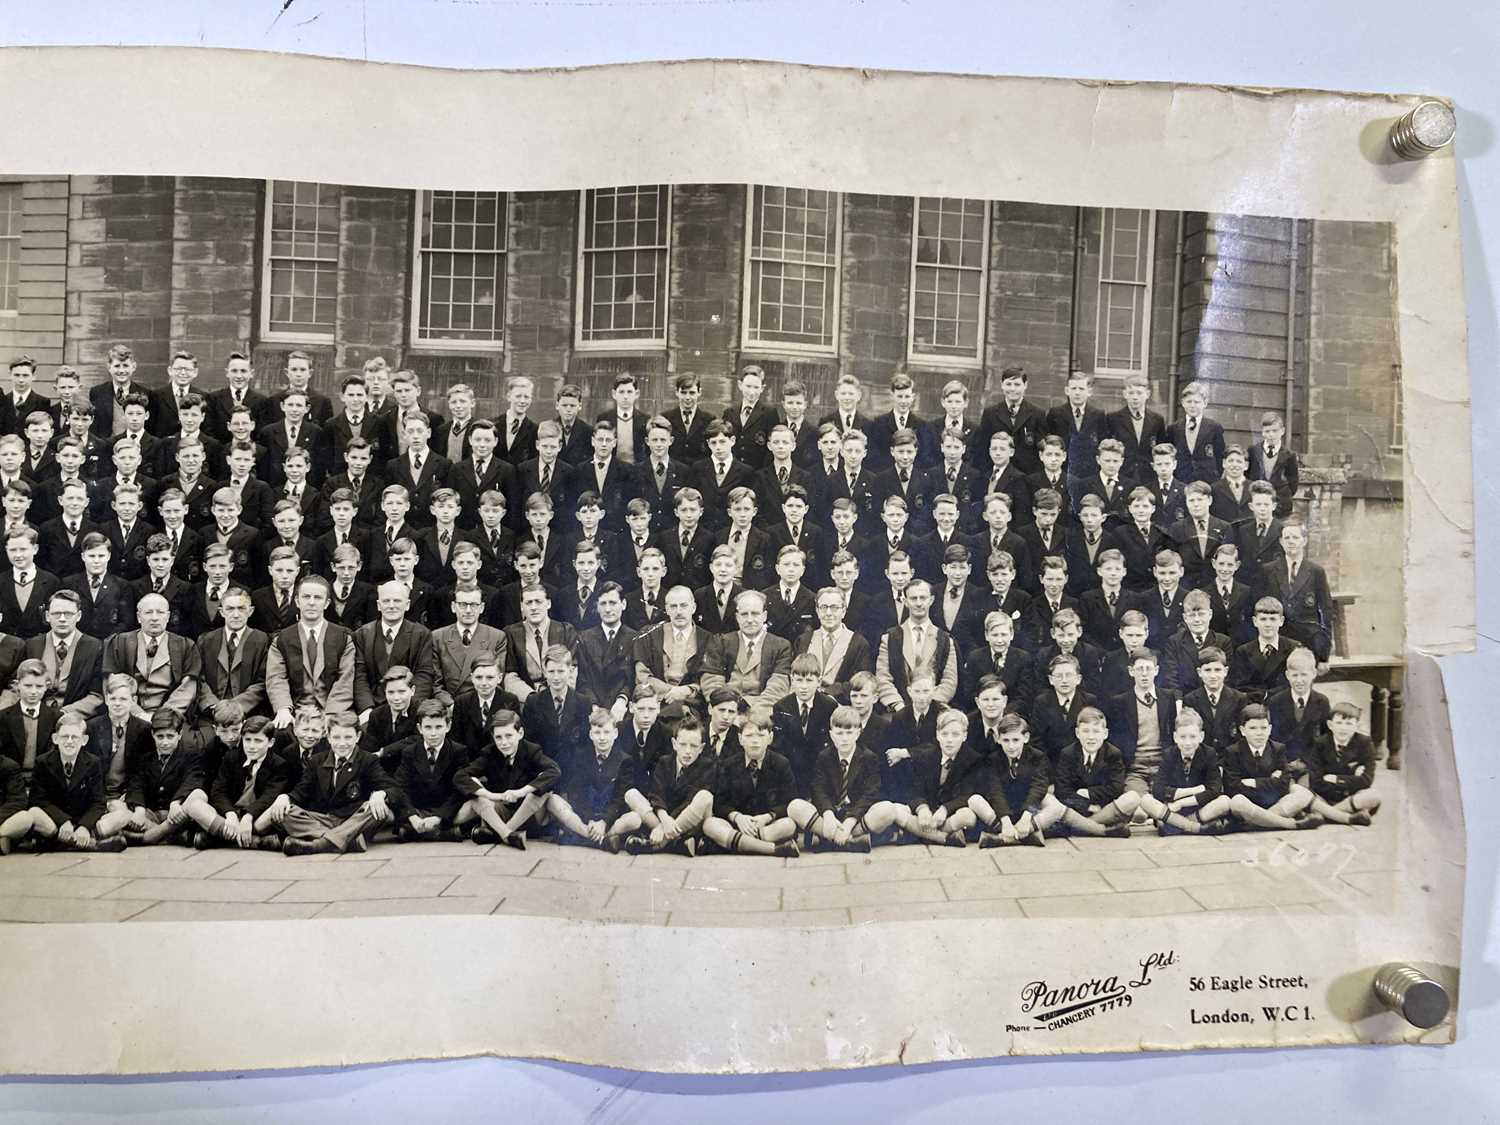 THE BEATLES - ORIGINAL LIVERPOOL INSTITUTE SCHOOL PHOTOGRAPH 1956 - PAUL MCCARTNEY / GEORGE HARRISON - Image 5 of 18